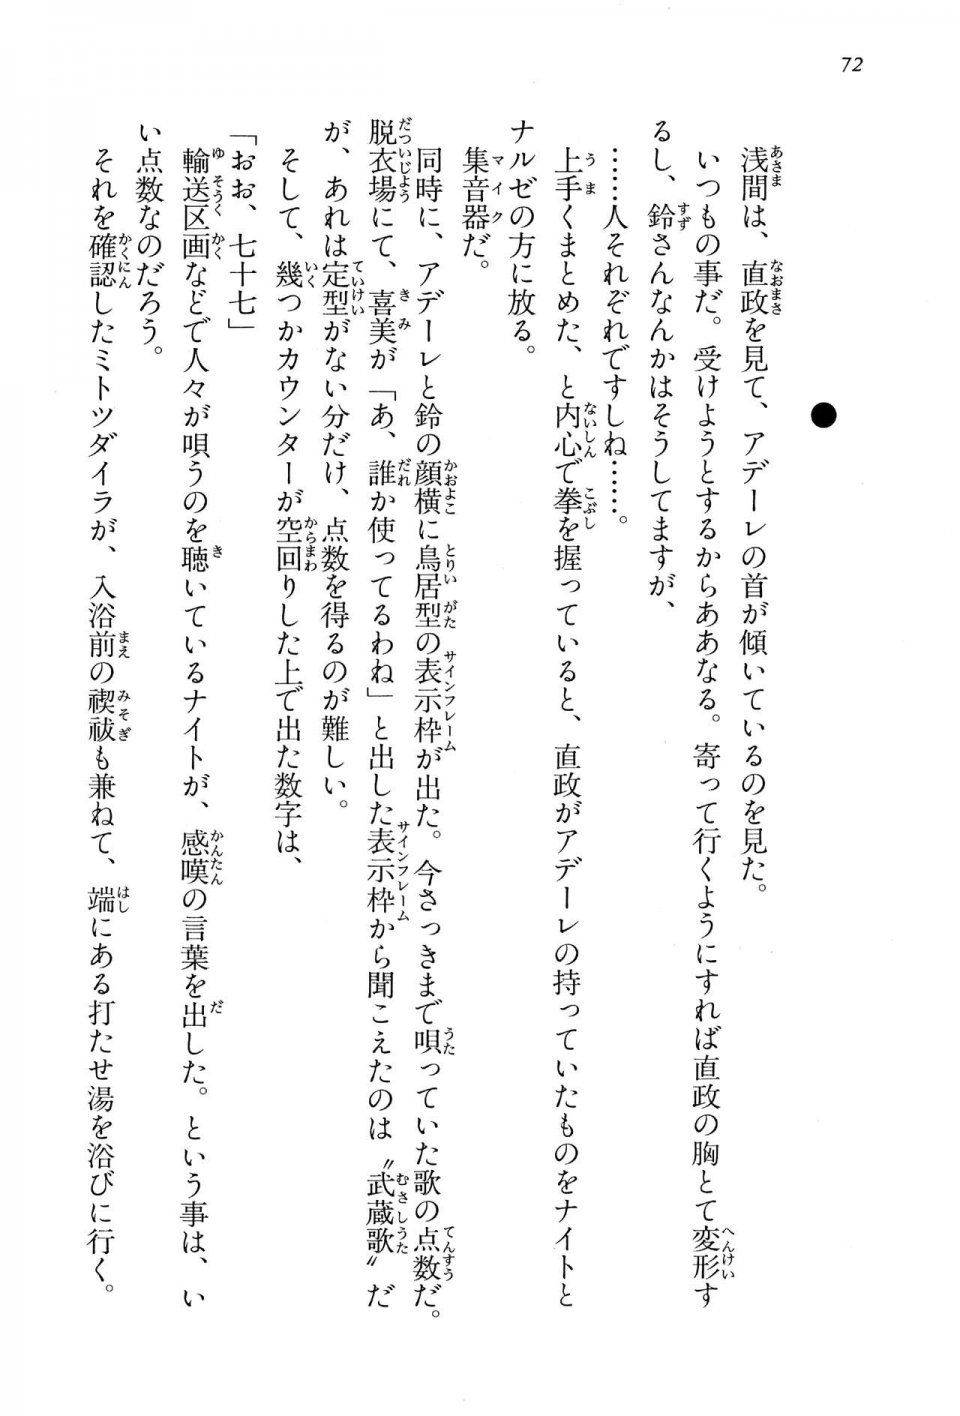 Kyoukai Senjou no Horizon BD Special Mininovel Vol 3(2A) - Photo #76